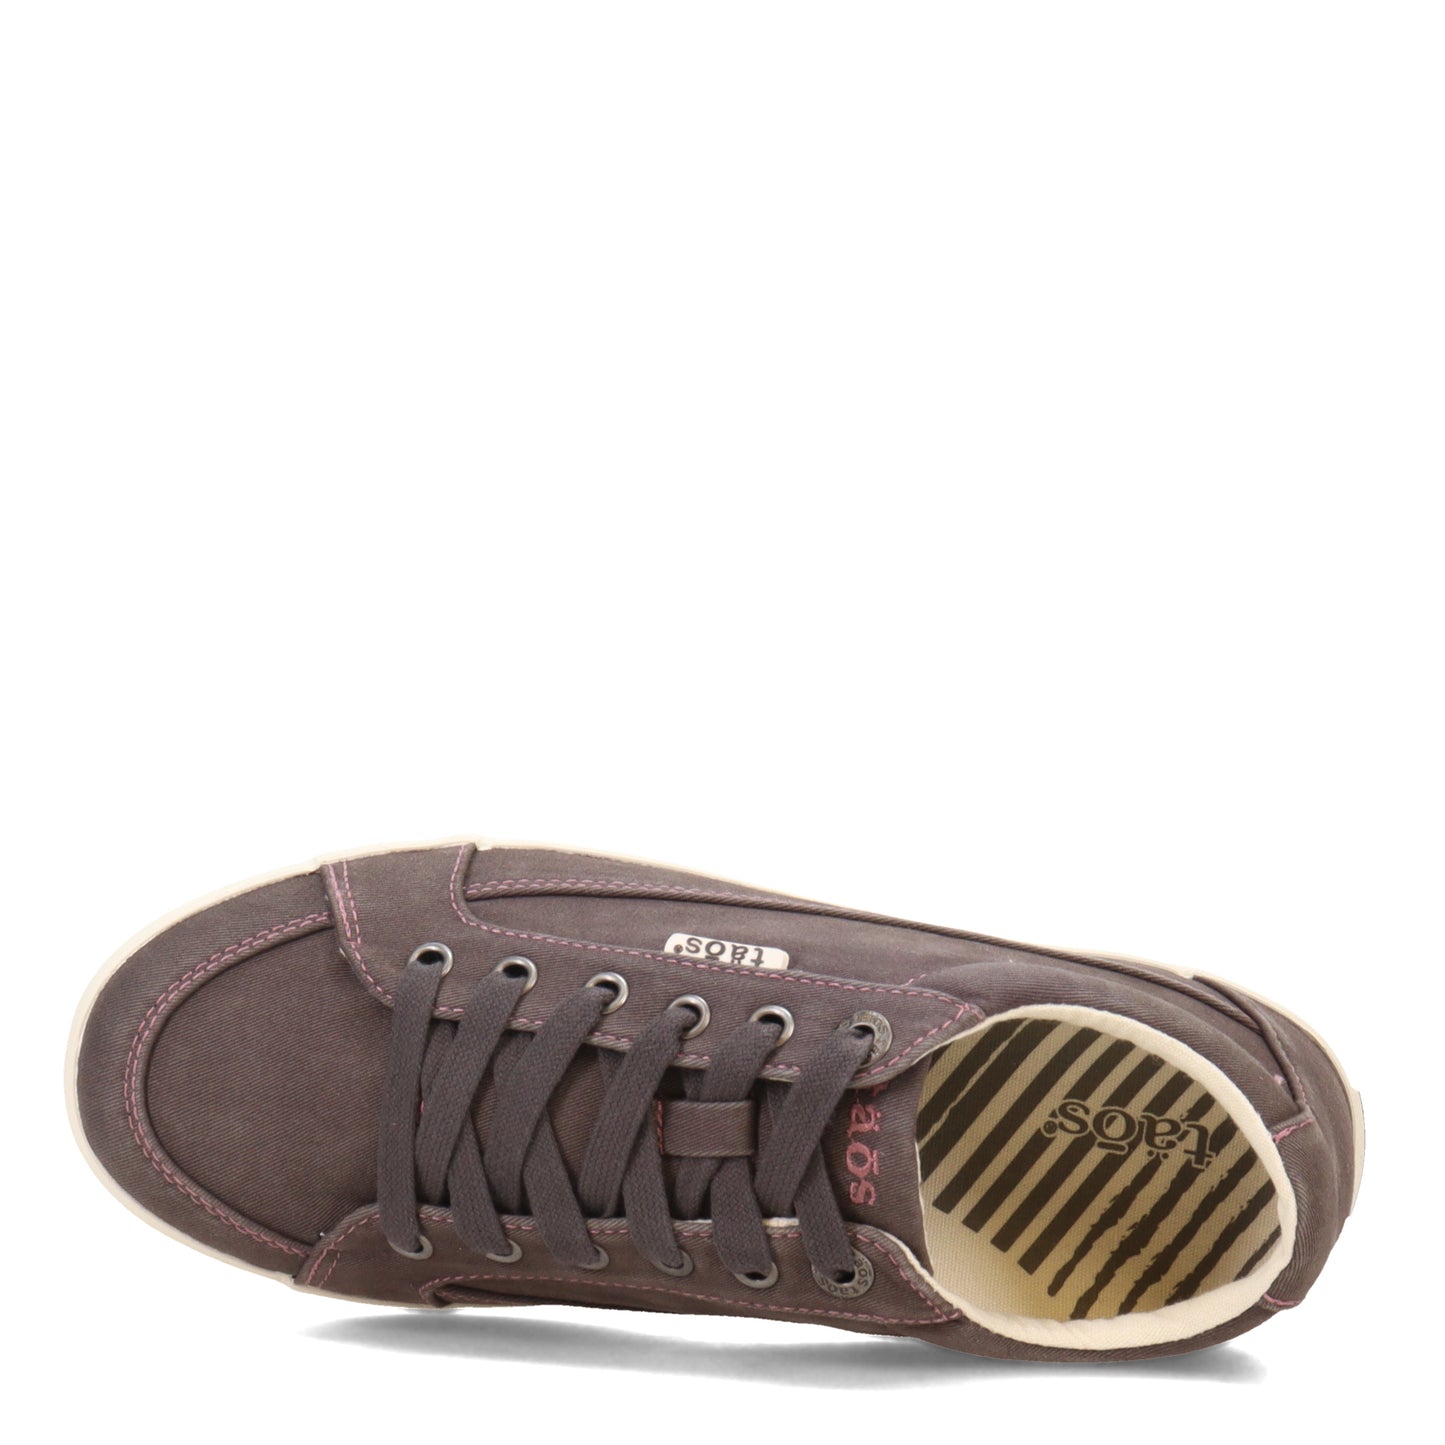 Peltz Shoes  Women's Taos Moc Star 2 Sneaker Graphite Distressed MS2-13482B-GRPD